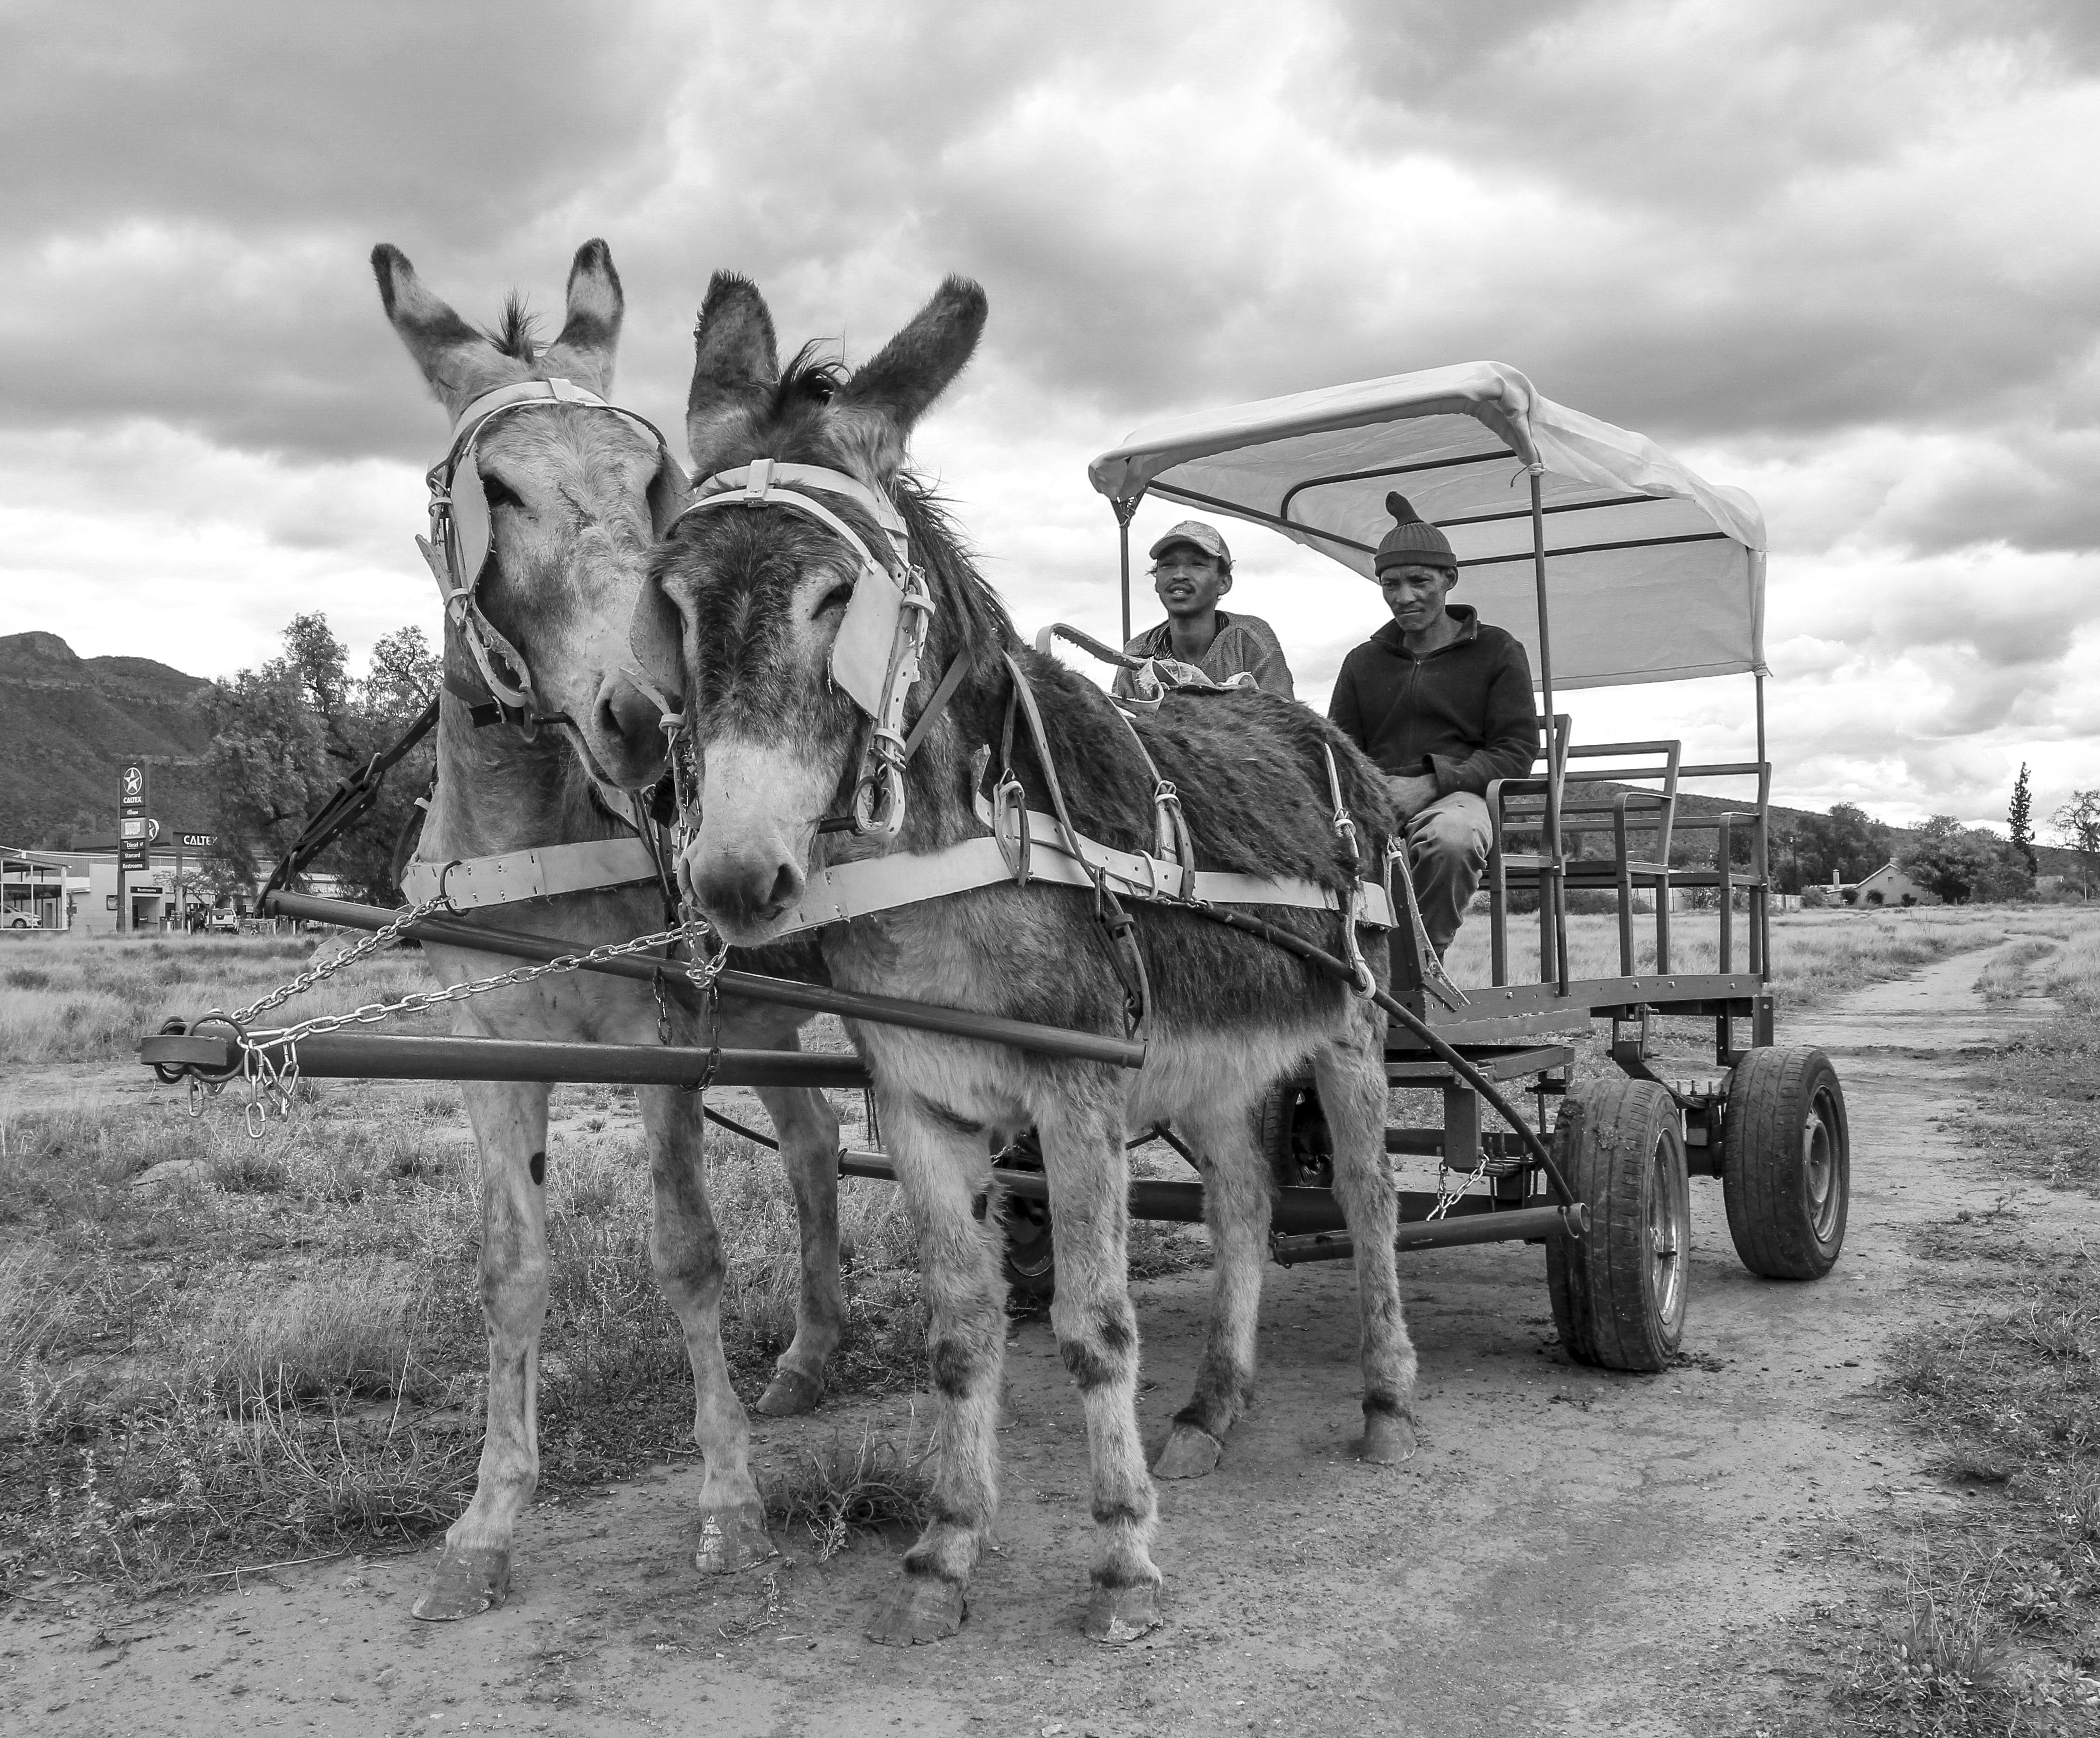 Graaff-Reinet has its own donkey cart manufacturing business. Image: Chris Marais